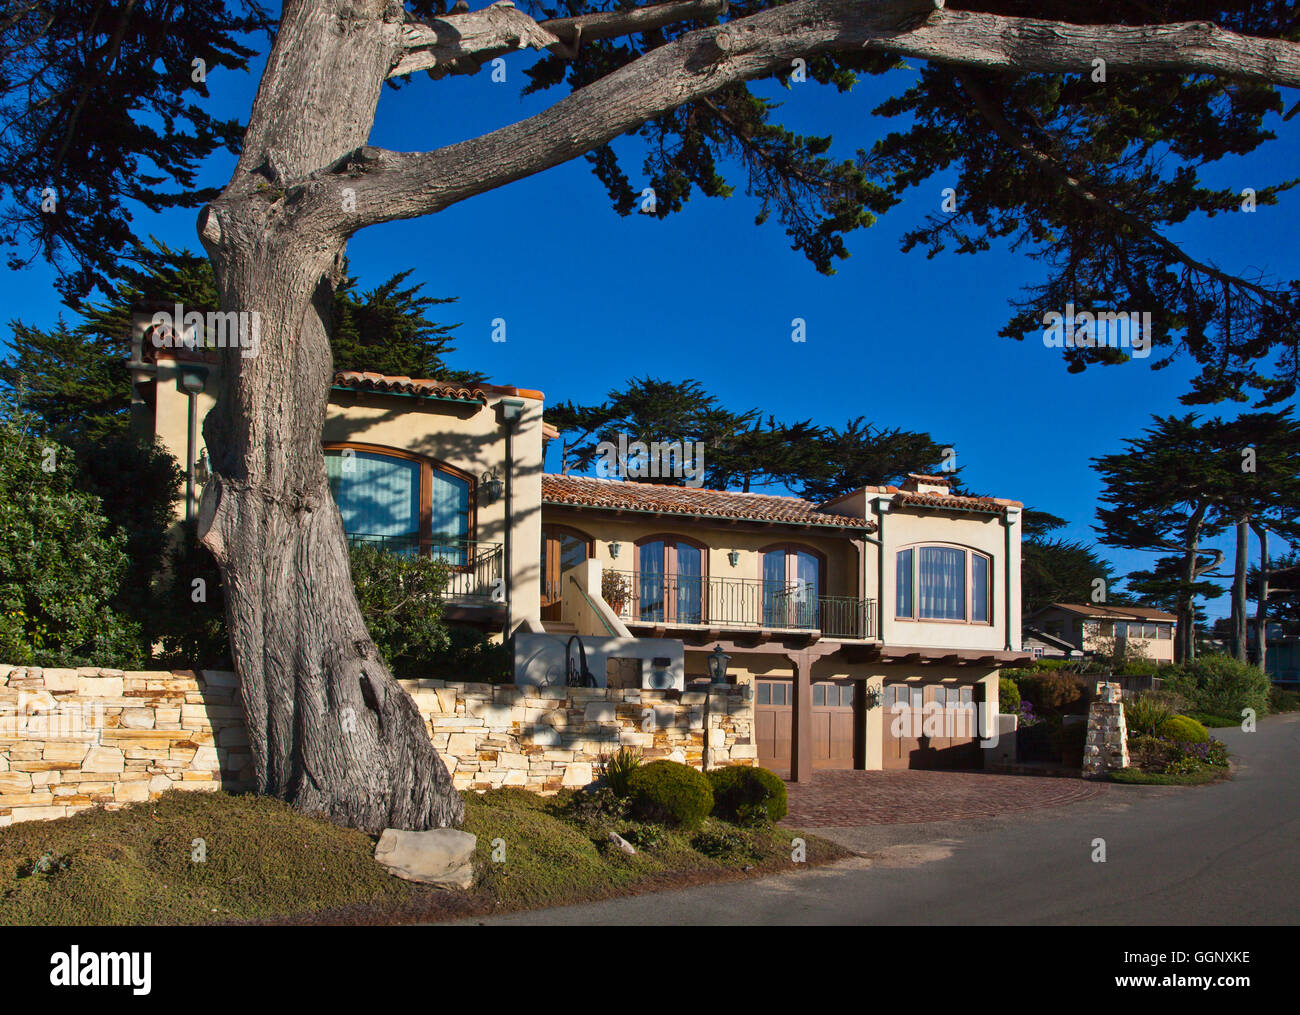 Casa de un millon de dolares fotografías e imágenes de alta resolución -  Alamy